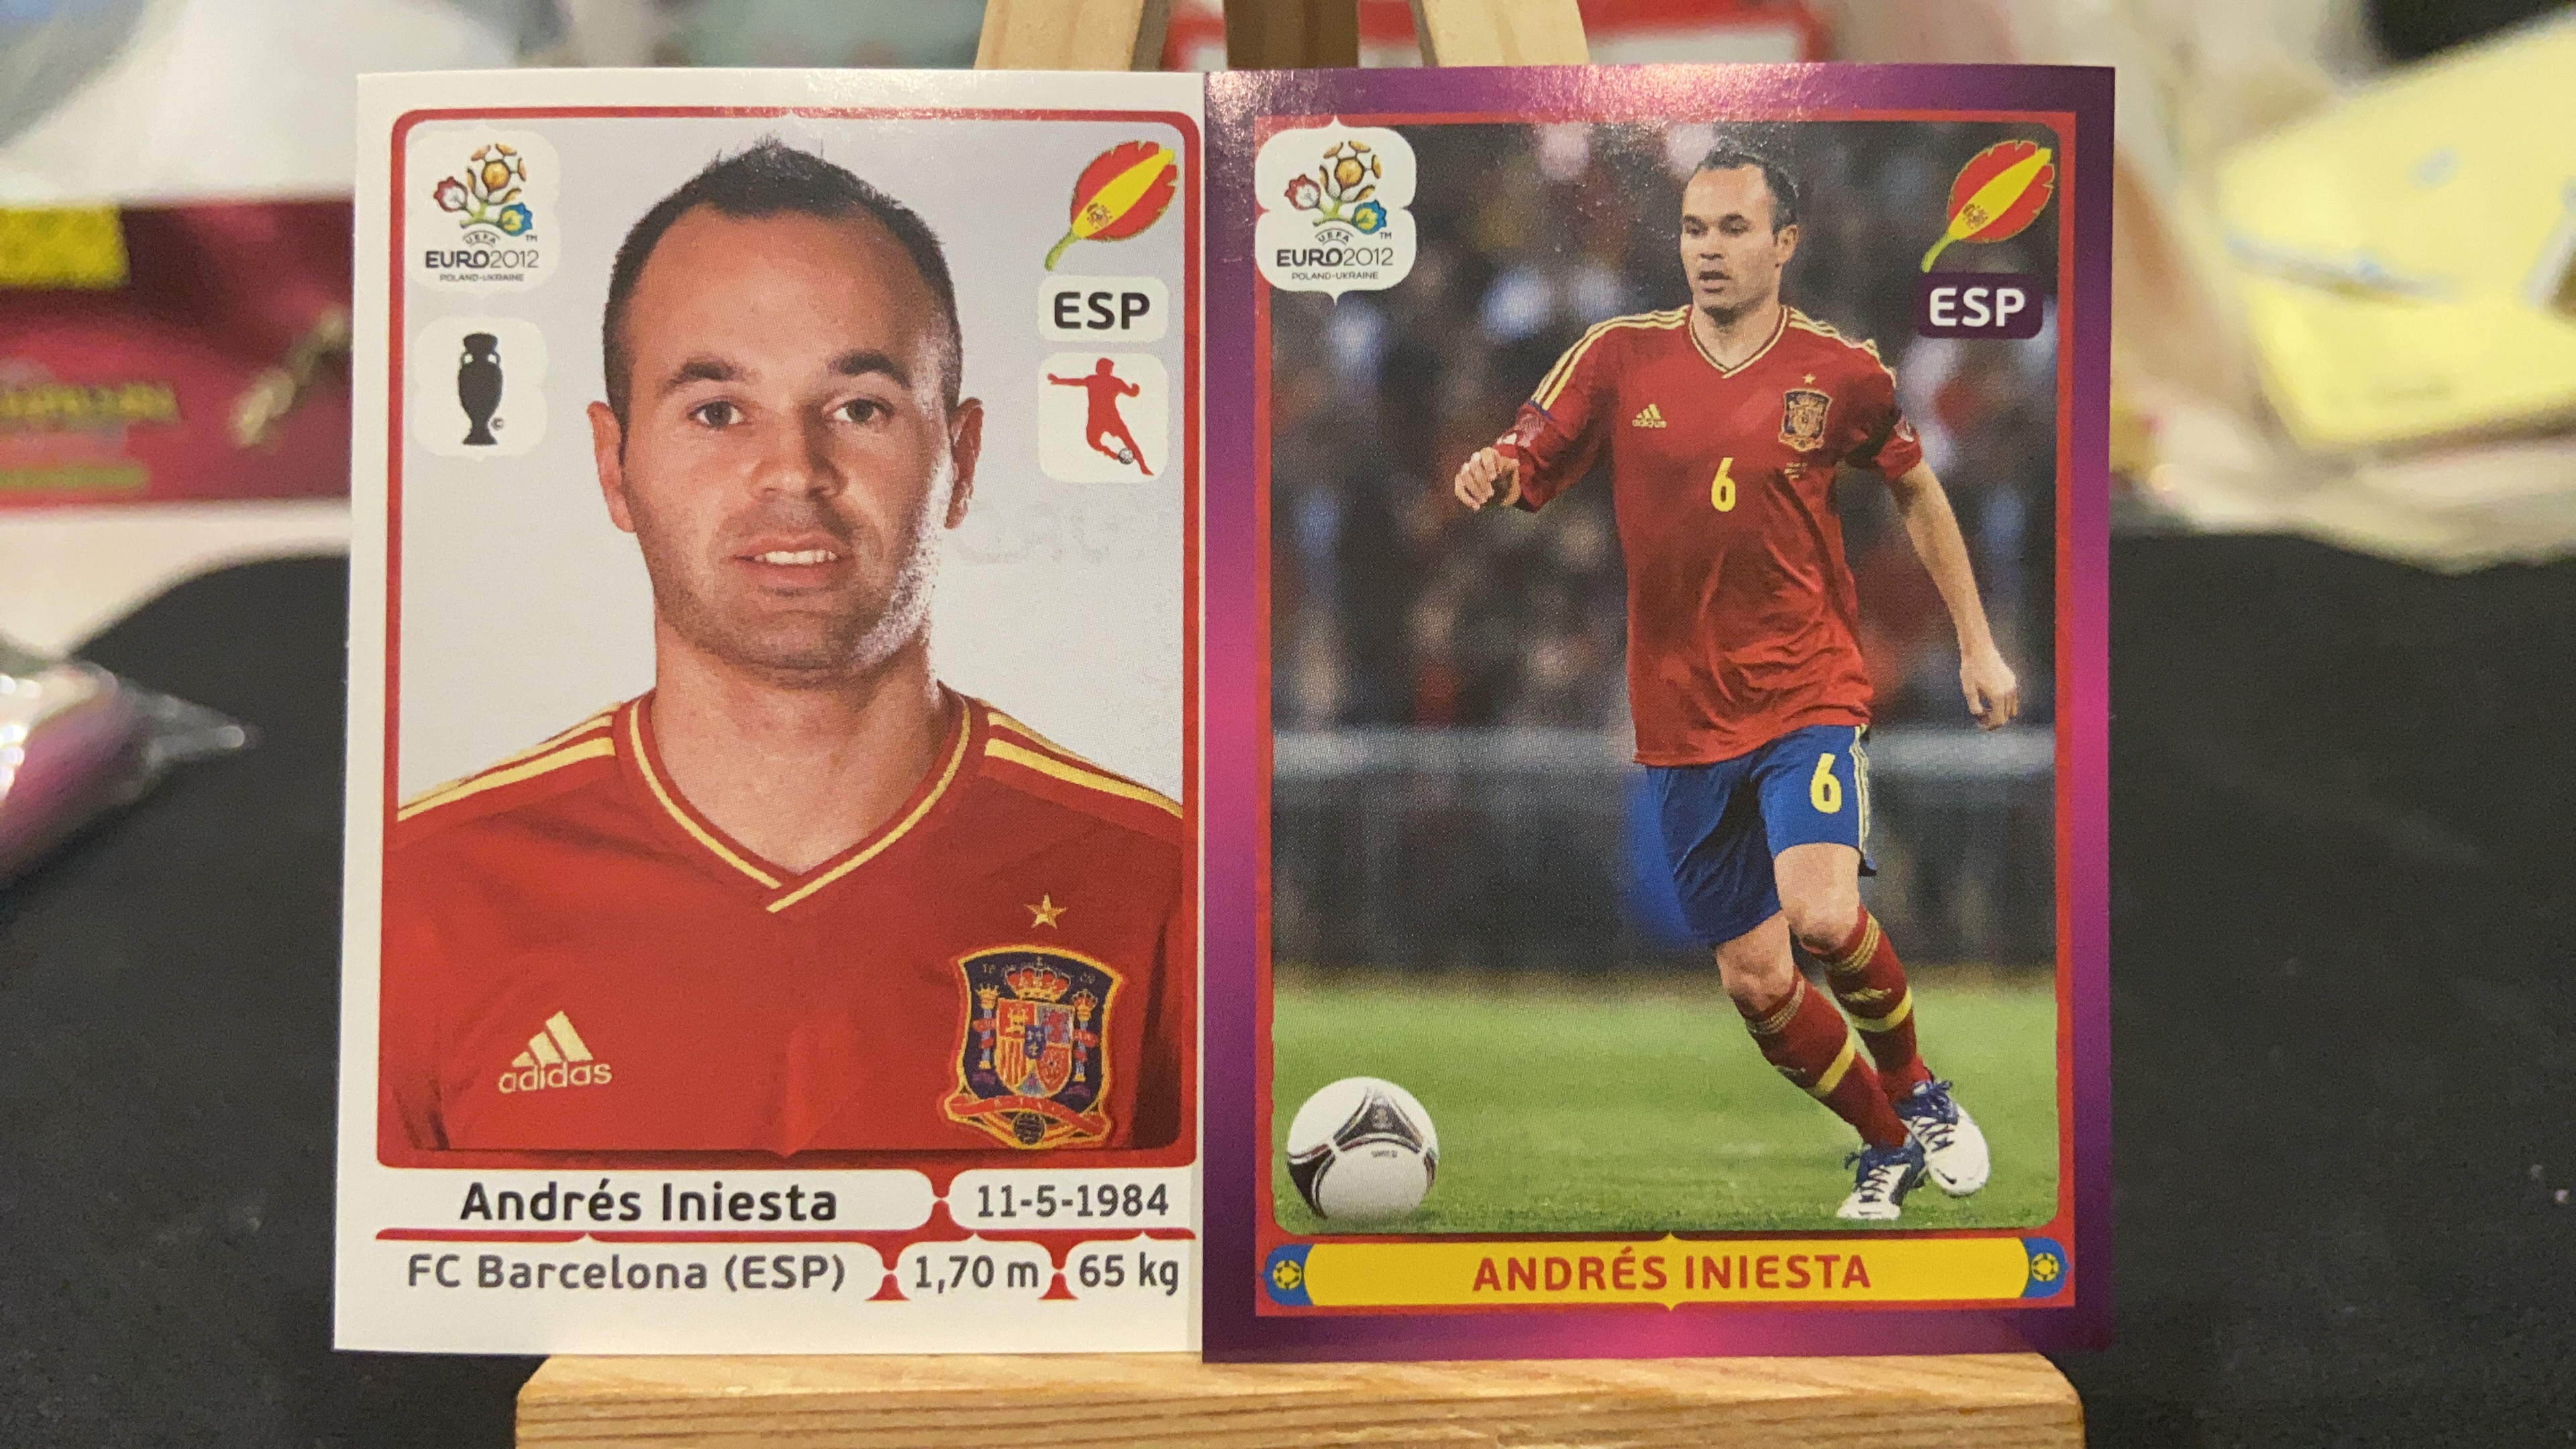 2012 Panini Euro 欧洲杯 贴纸 【不累计】 西班牙 巴萨 伊涅斯塔 大比例 凑套